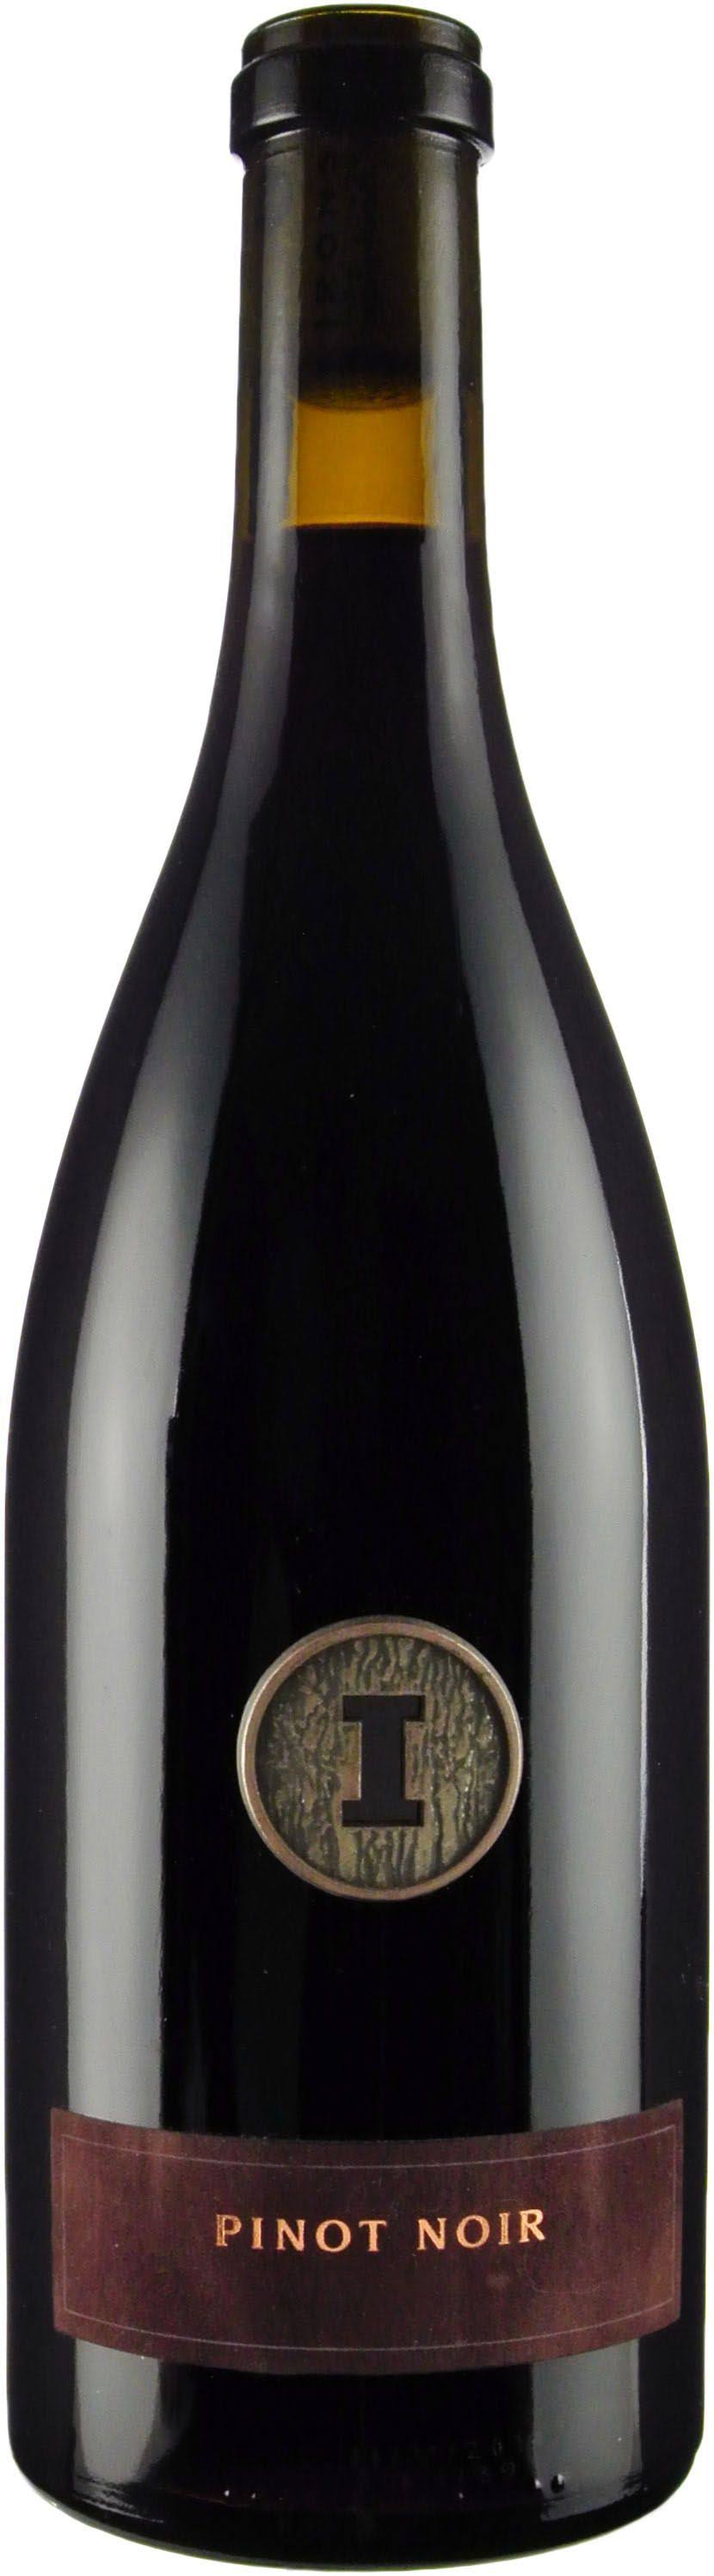 90+ Cellars Pinot Noir, California - 750 ml